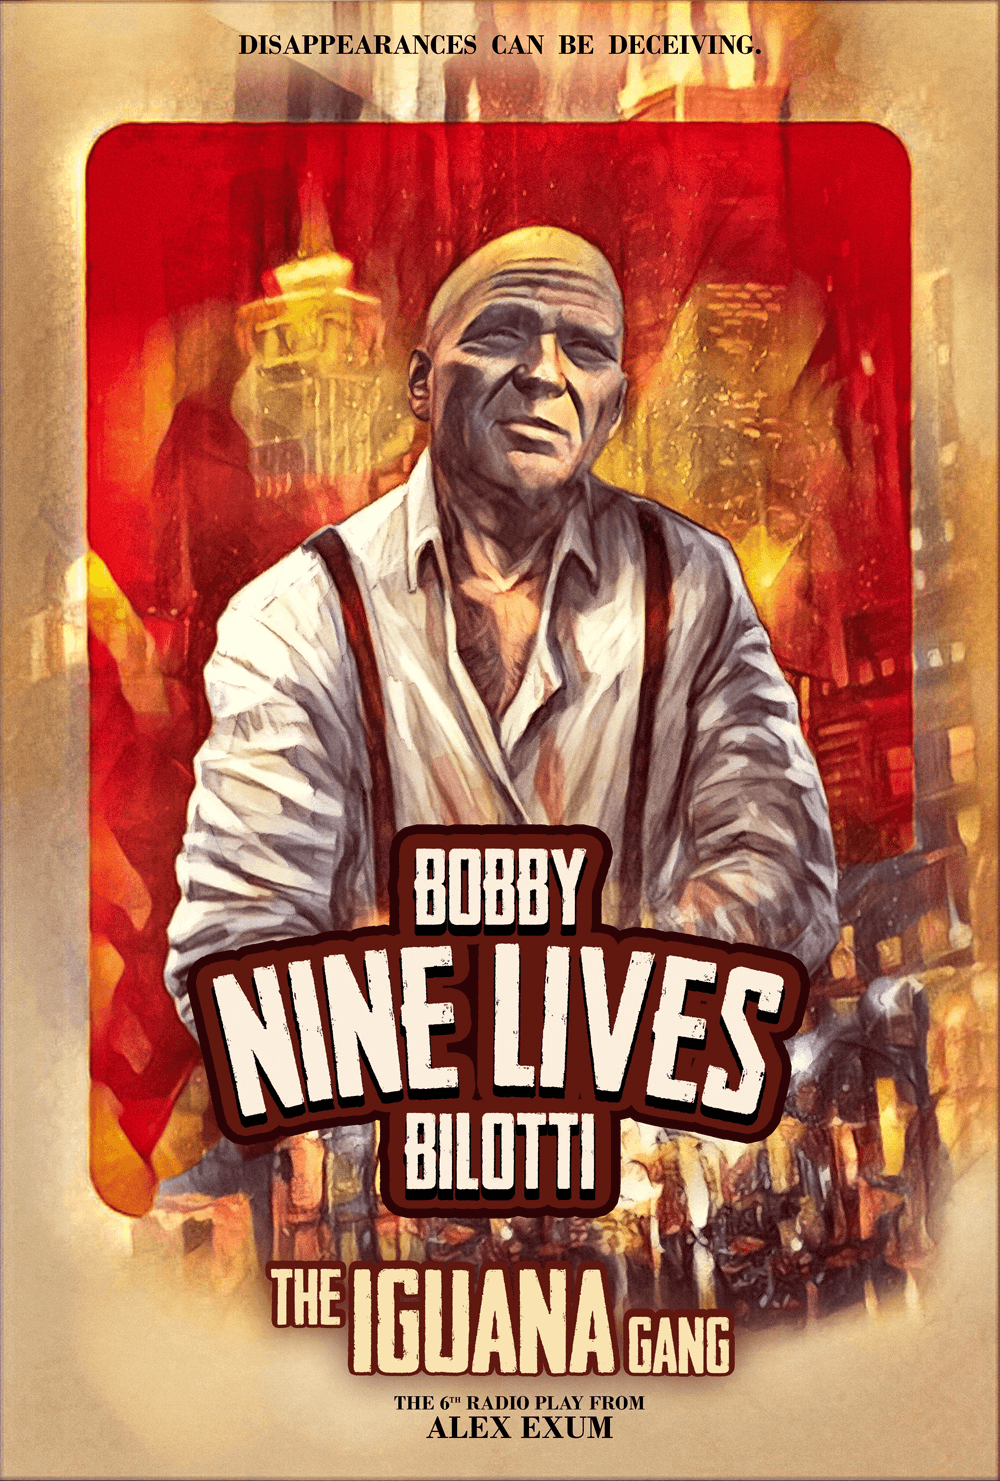 Bobby NINE LIVES Bilotti